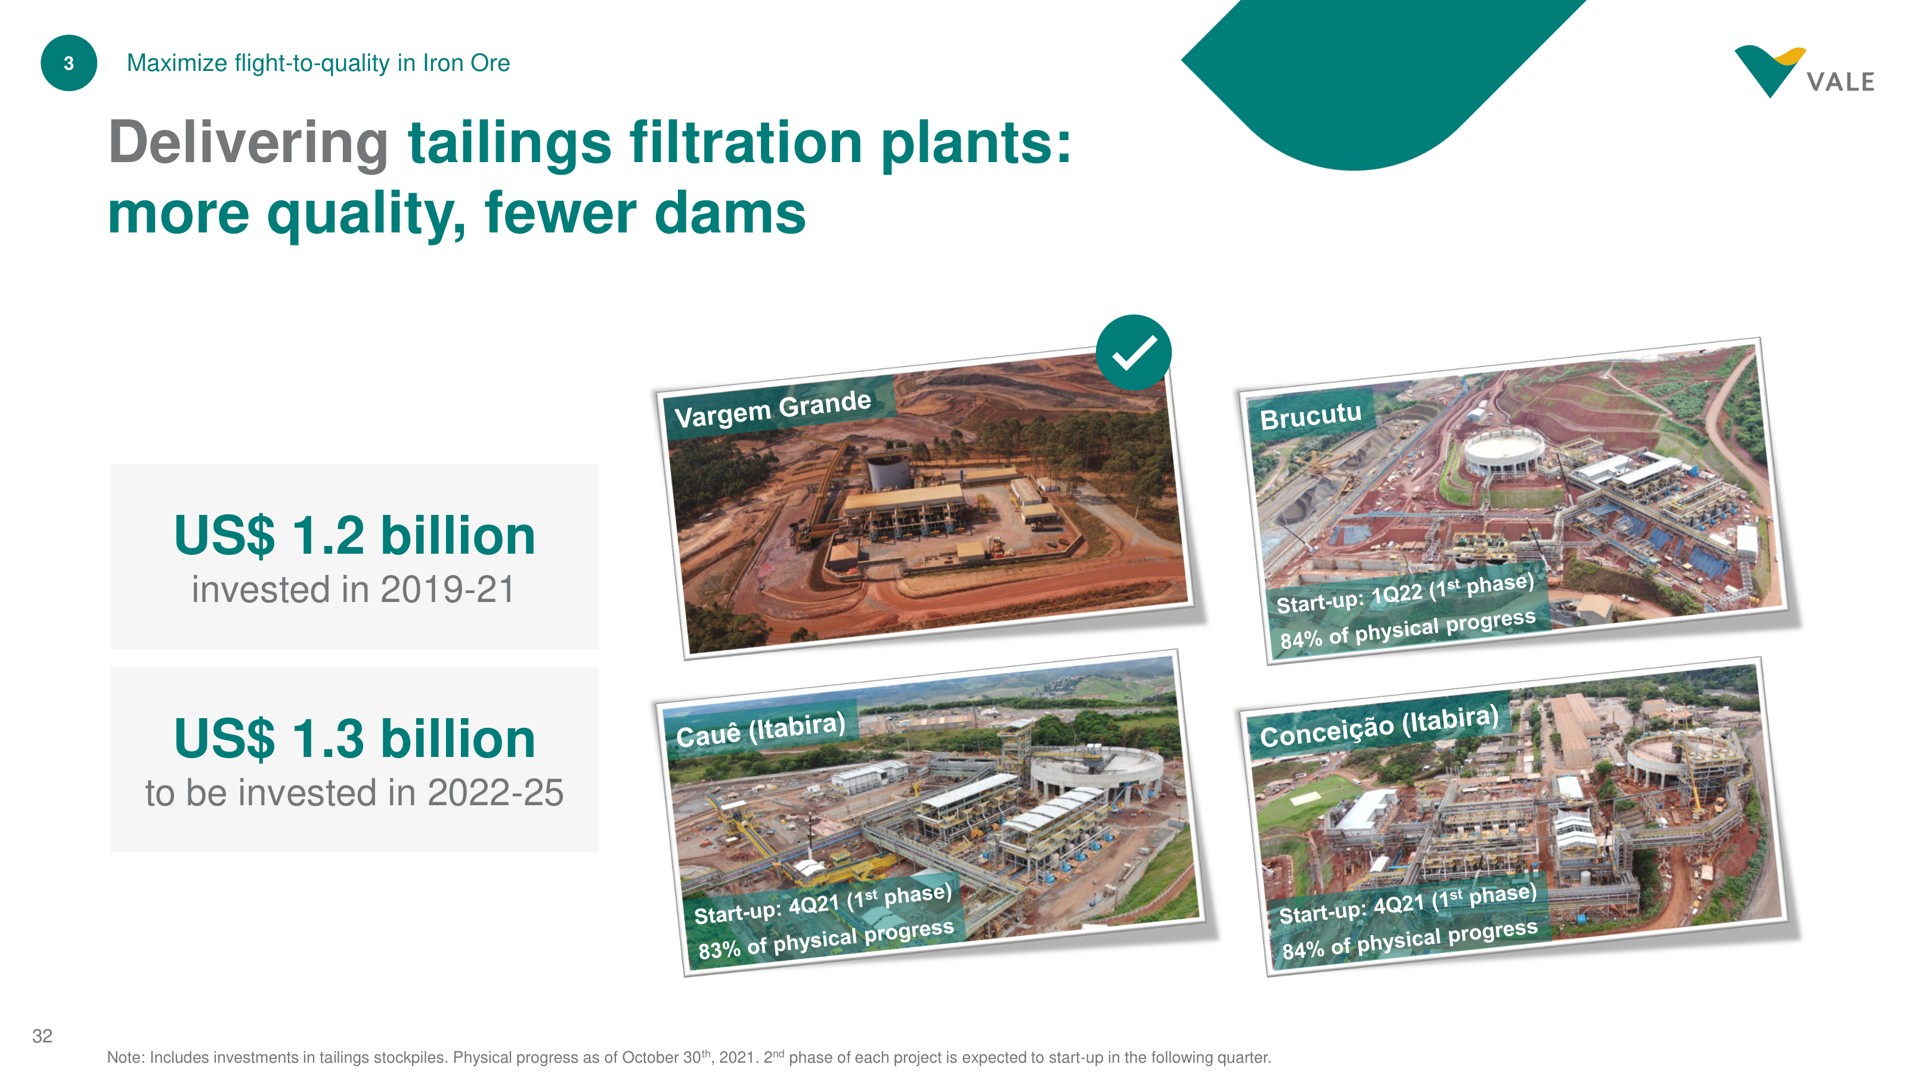 delivering tailings filtration plants more quality dams us billion us billion uss i | Vale